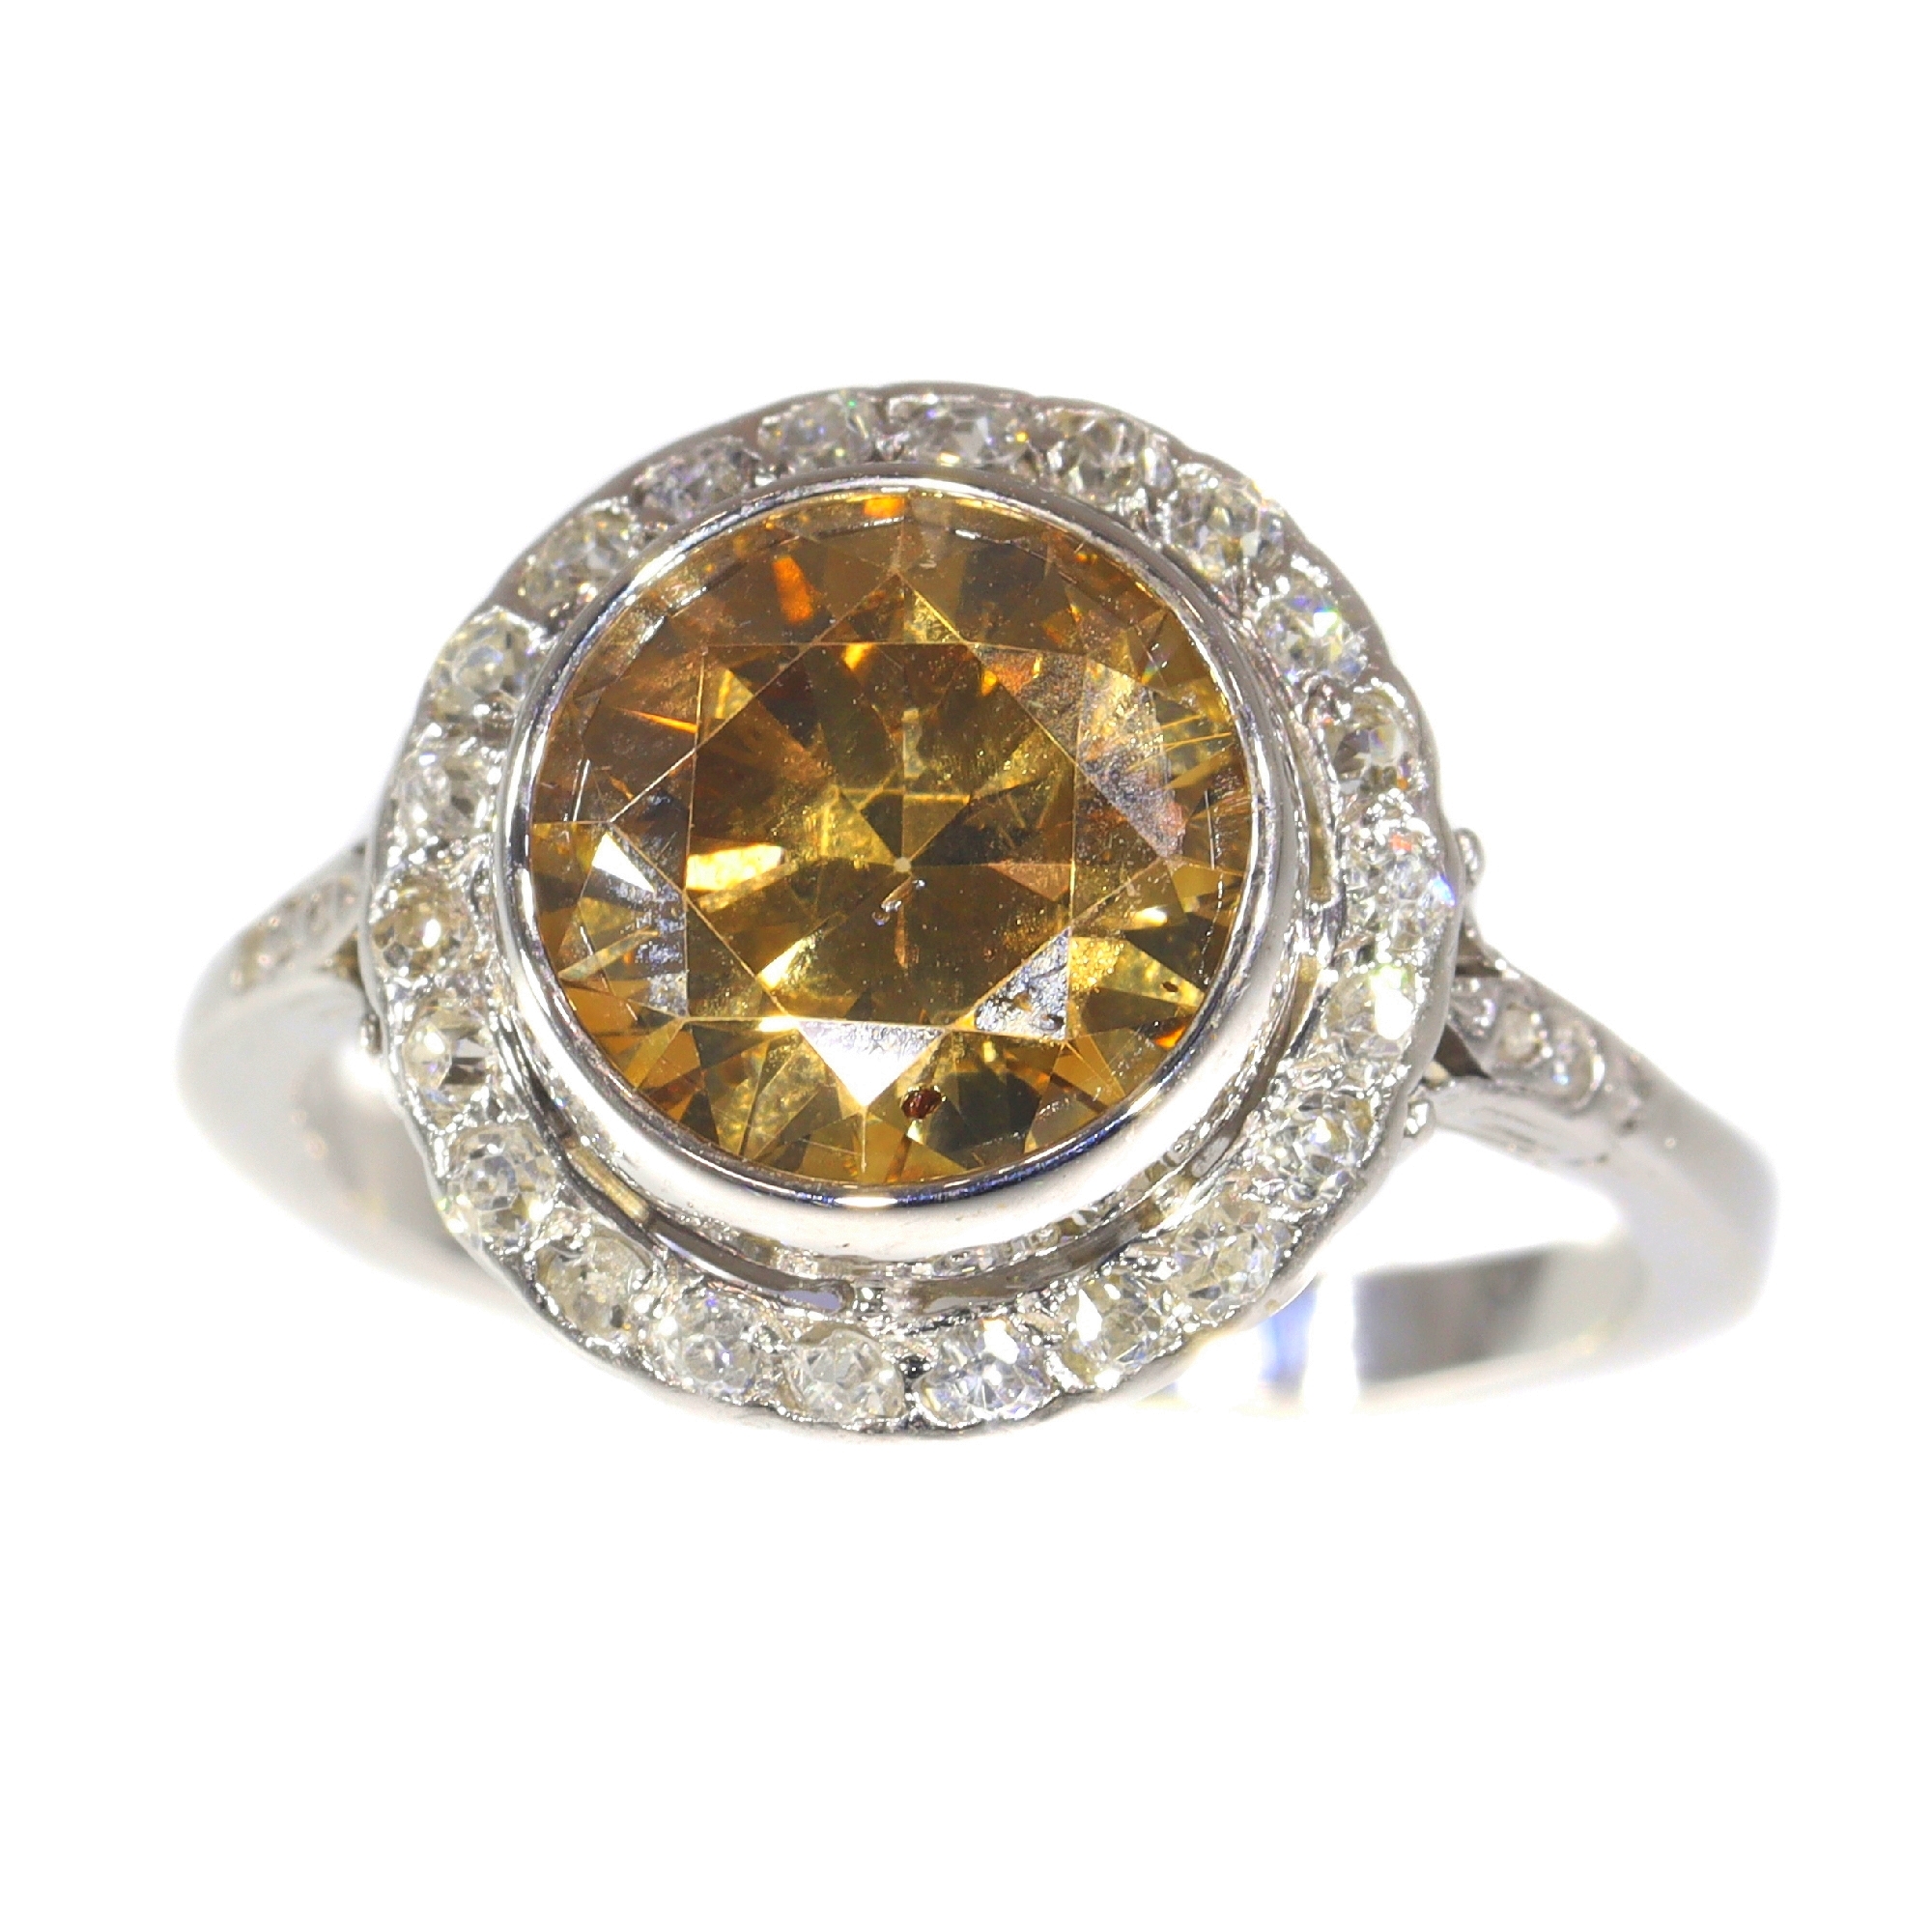 Mid-Century Allure: Unique Yellowish-Brown Diamond Ring